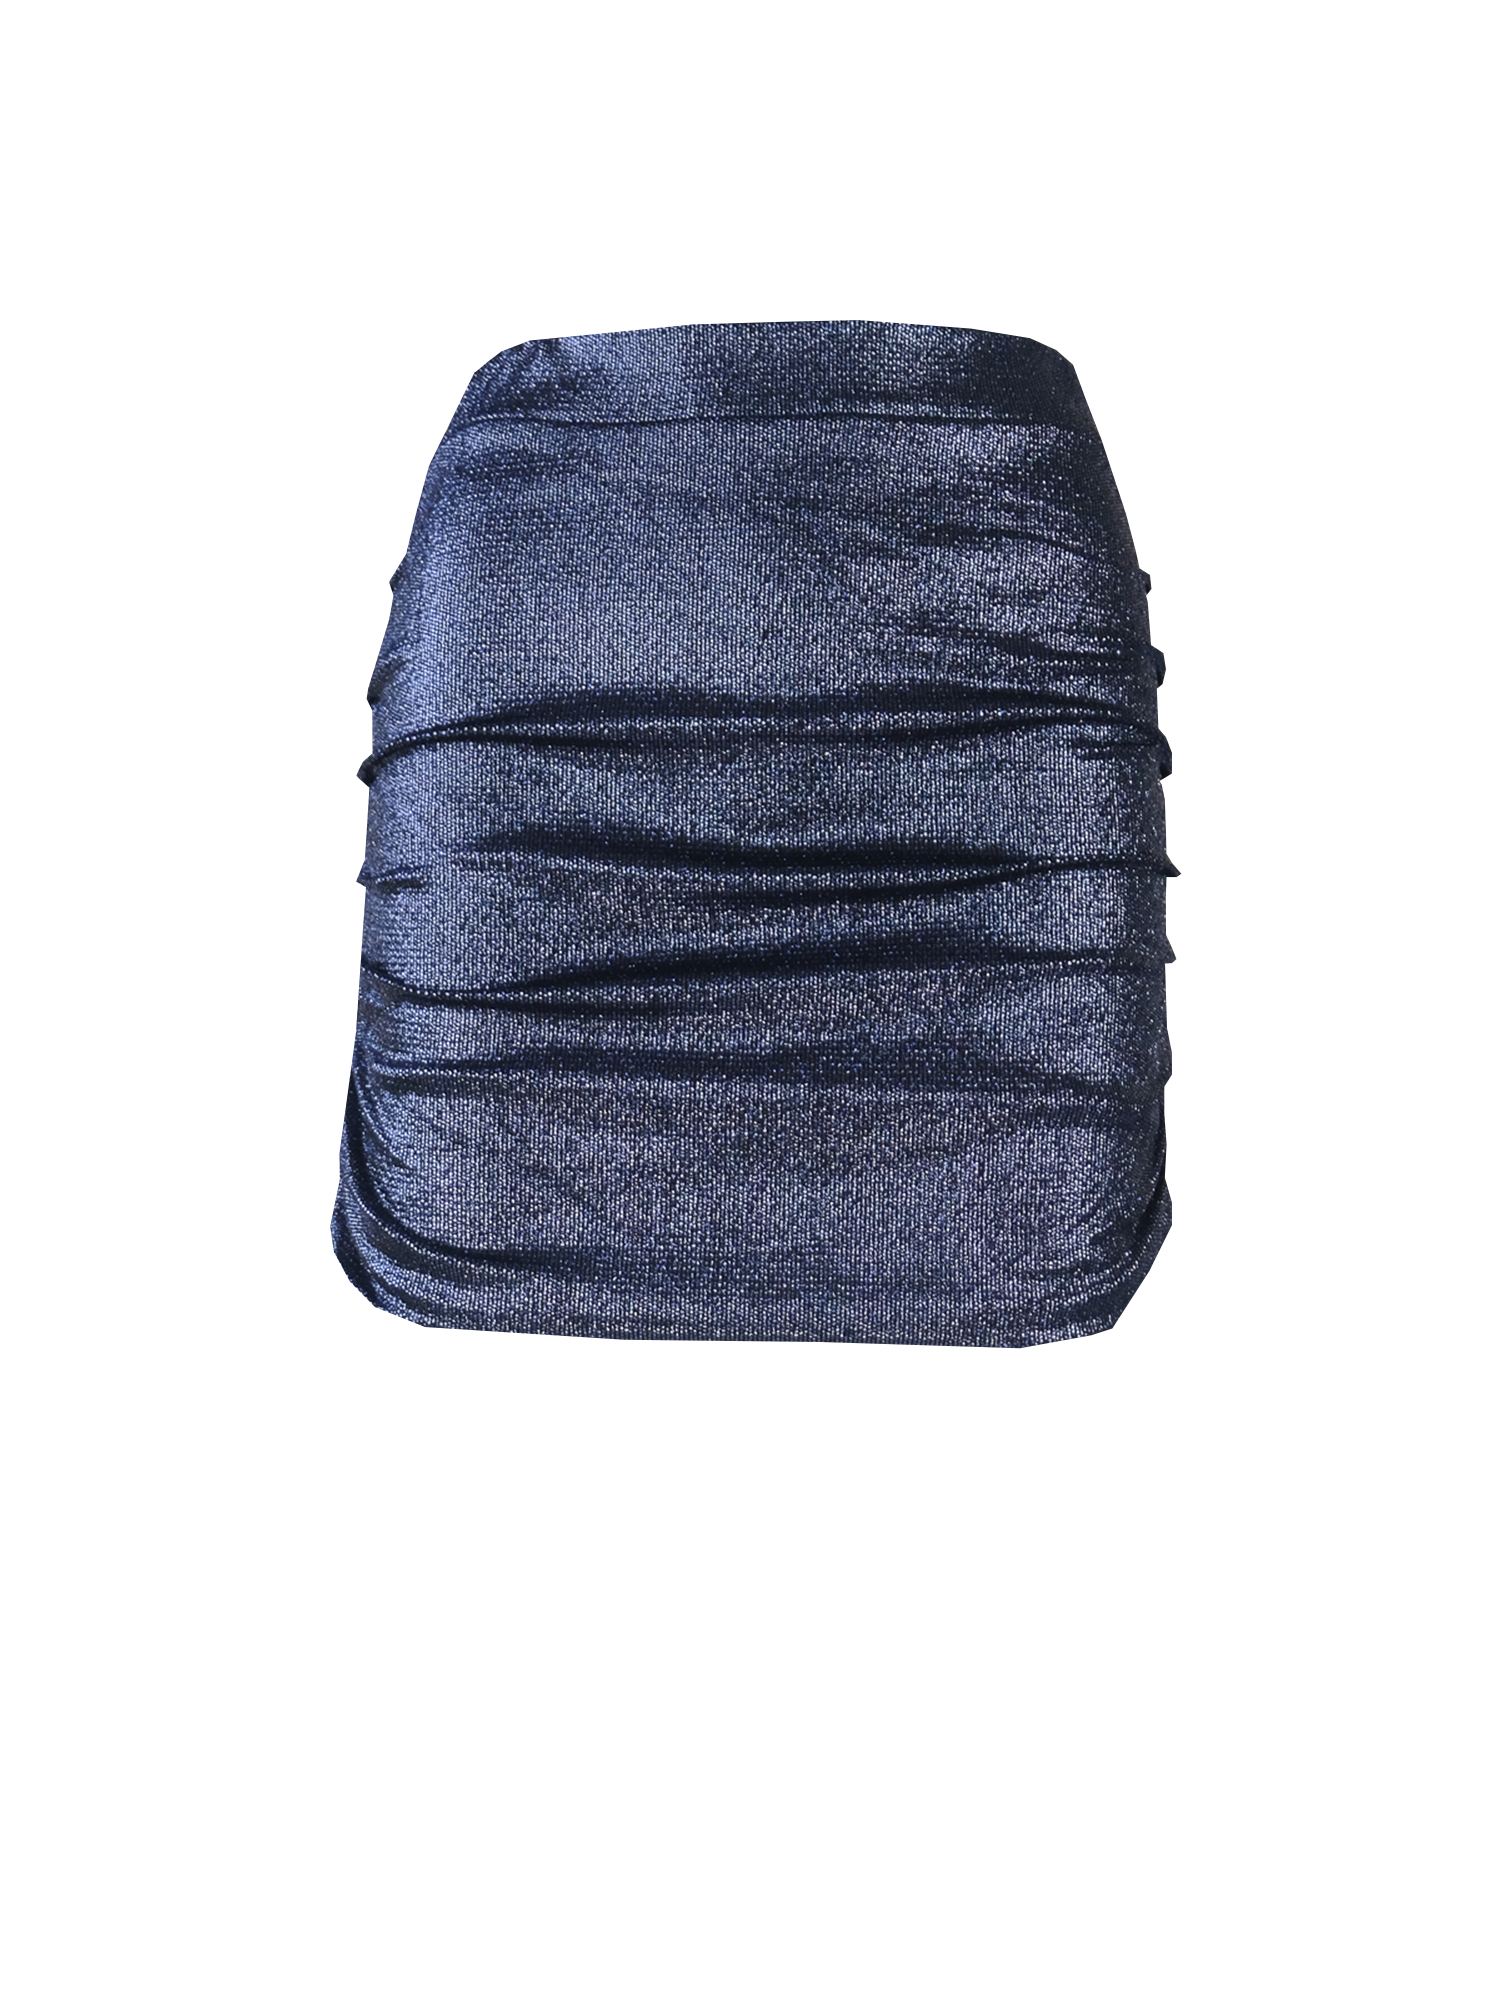 NINA - mini skirt in blue lurex